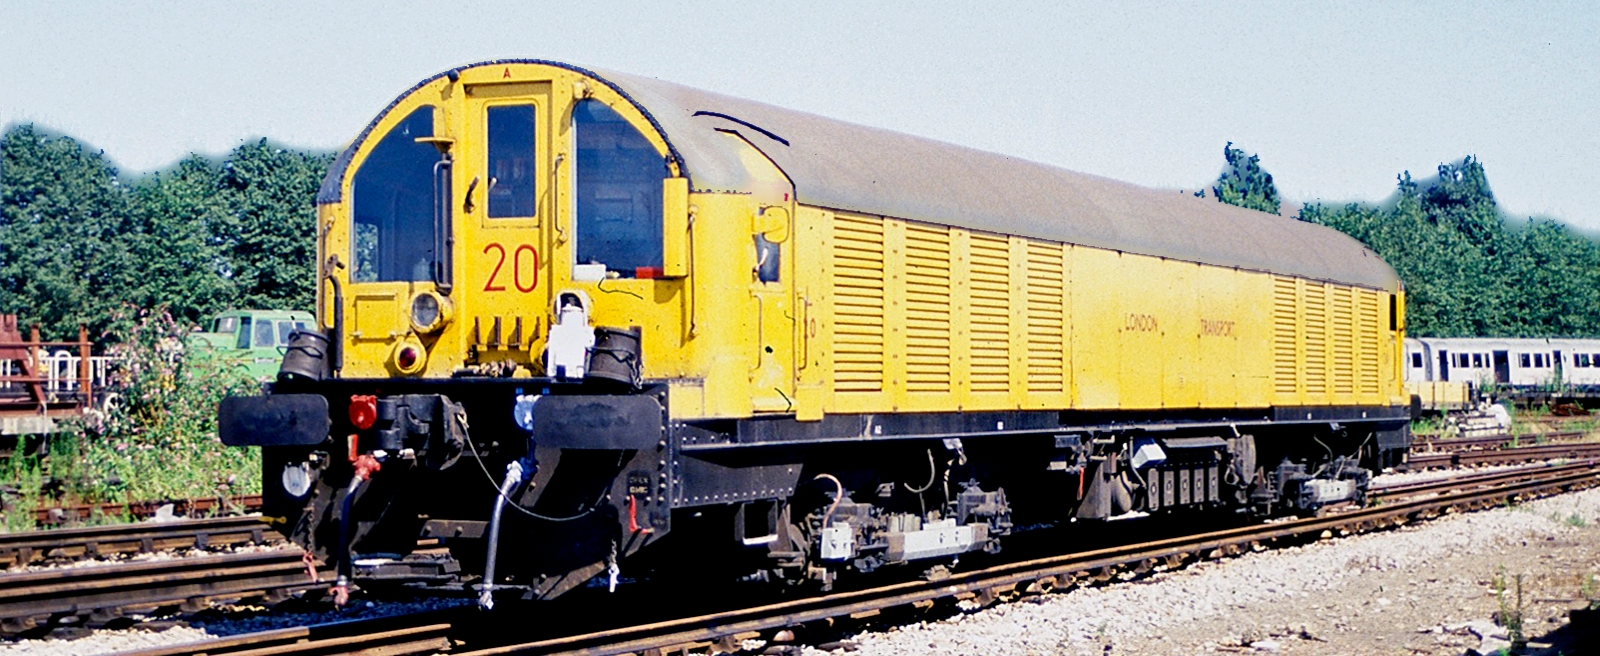 No. 20 in 1988 at Neasden Depot